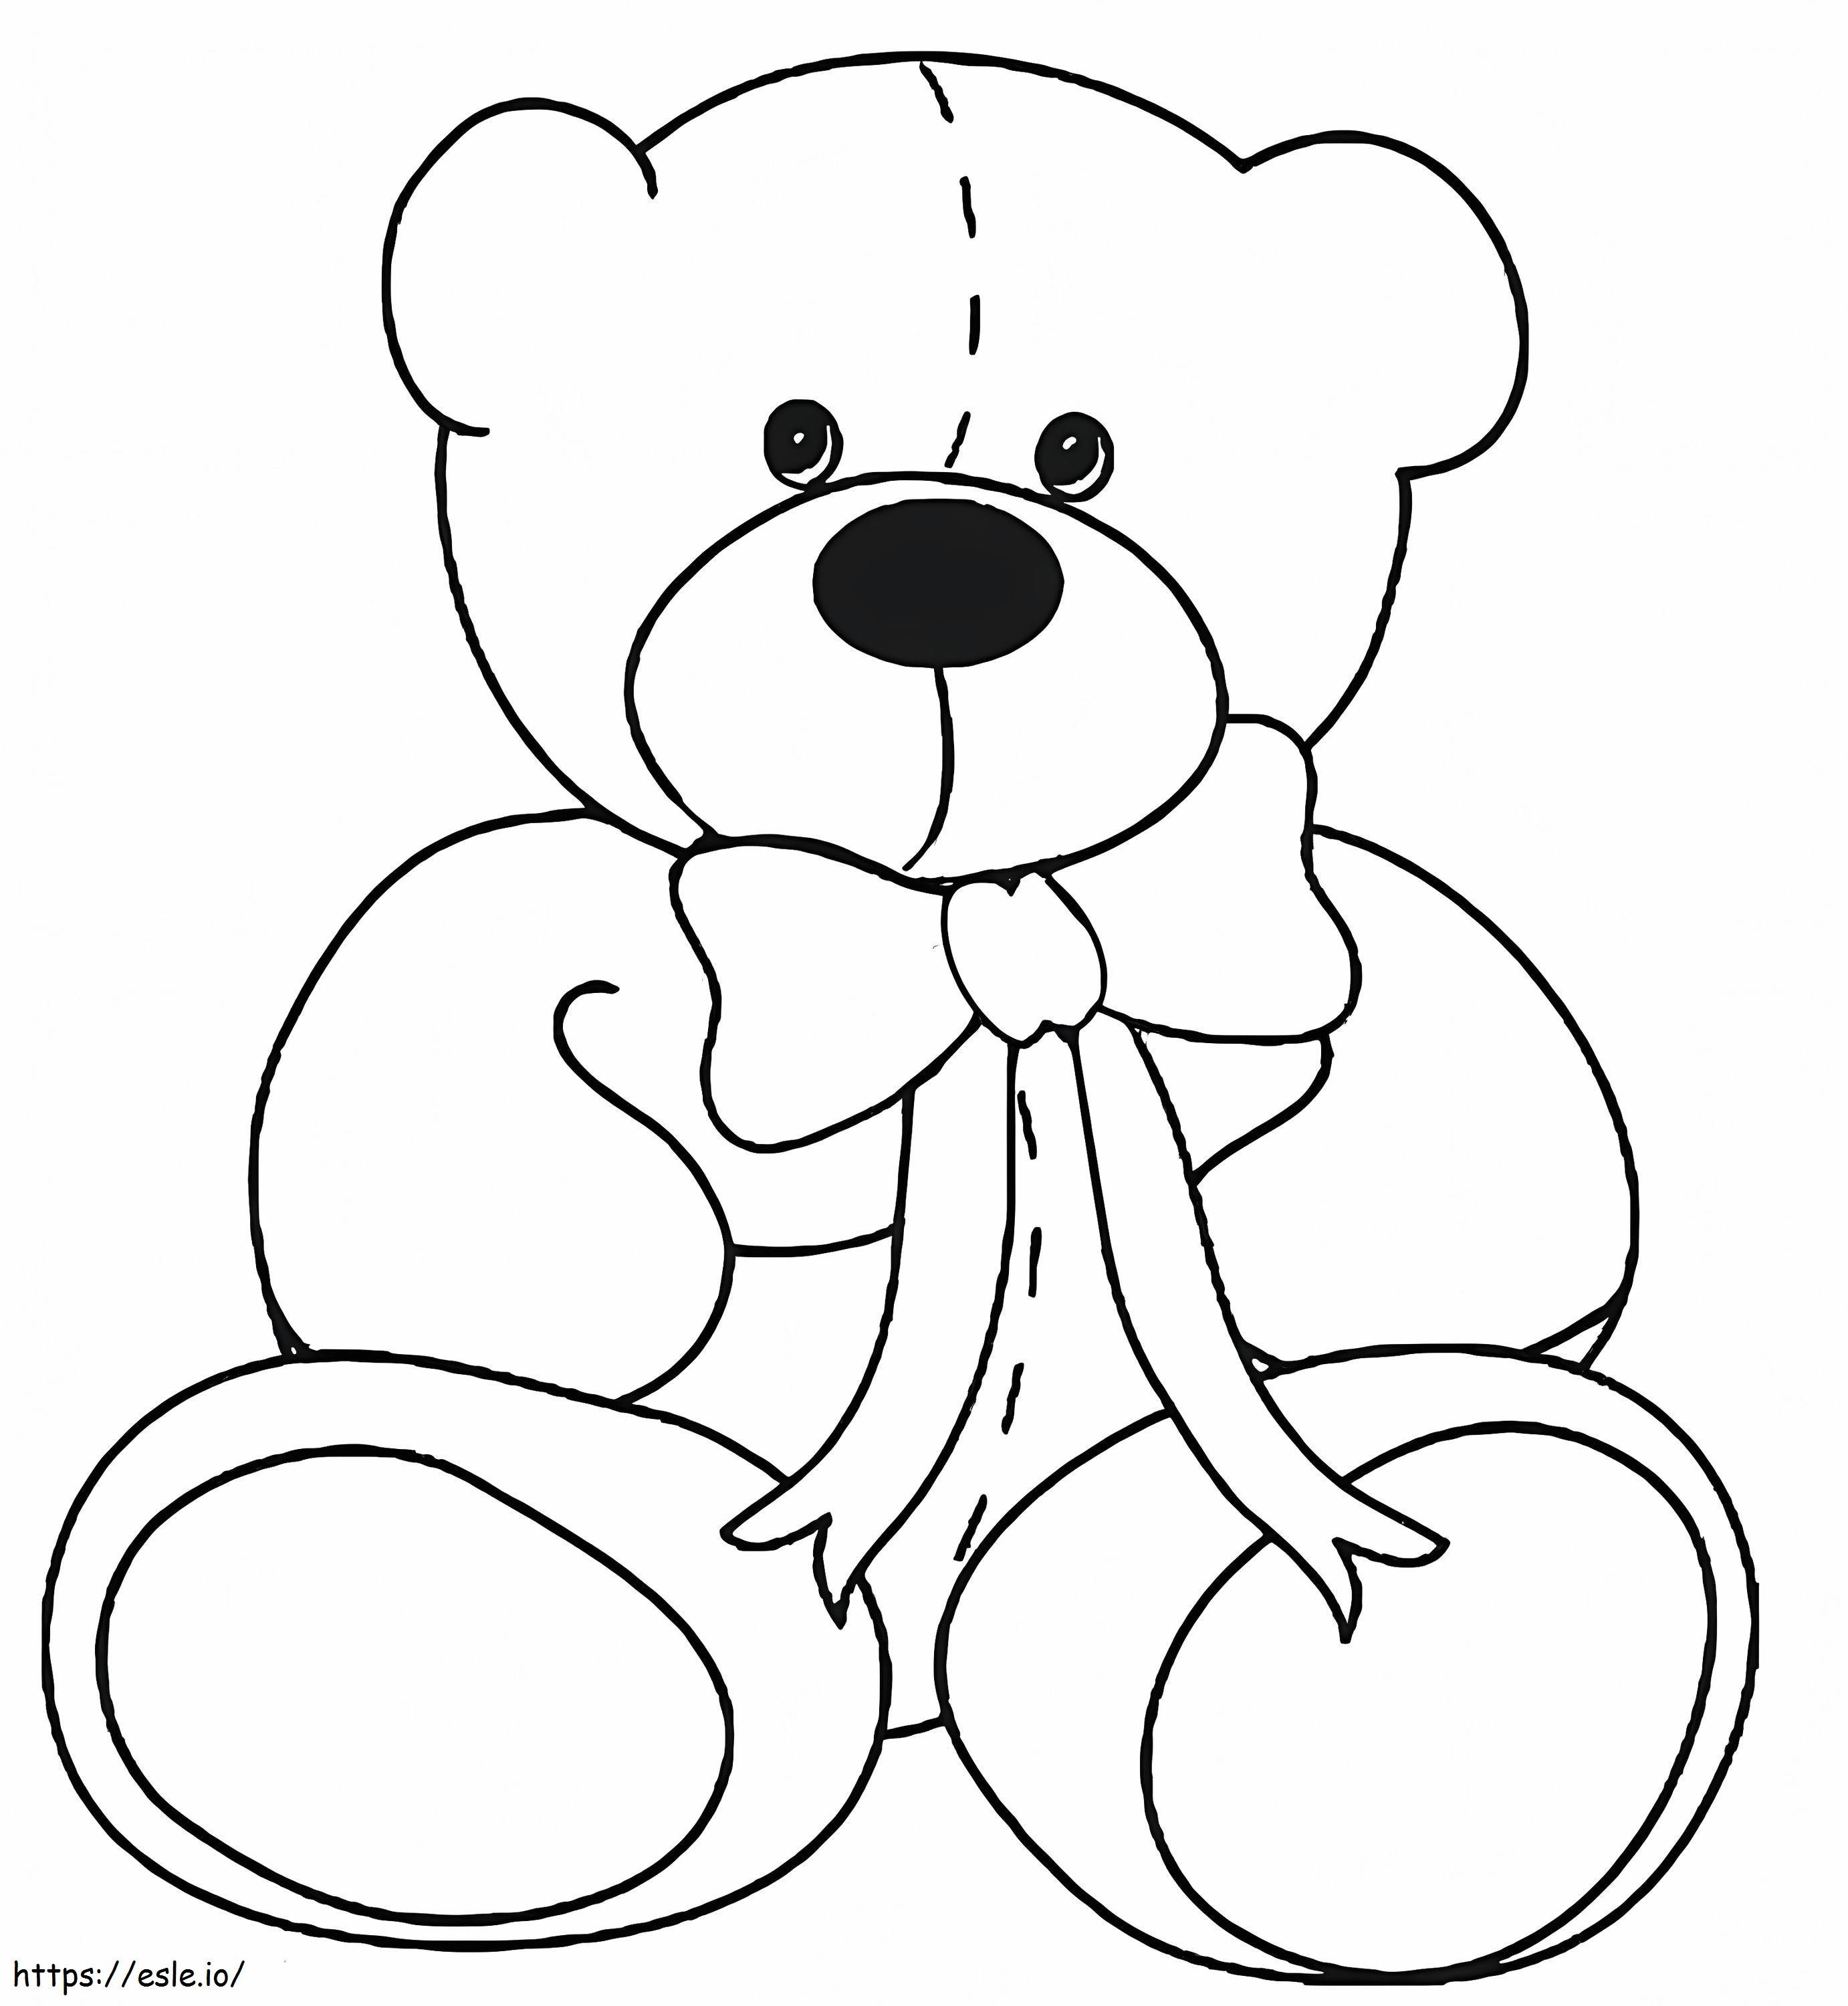 Teddybär mit Schleife ausmalbilder